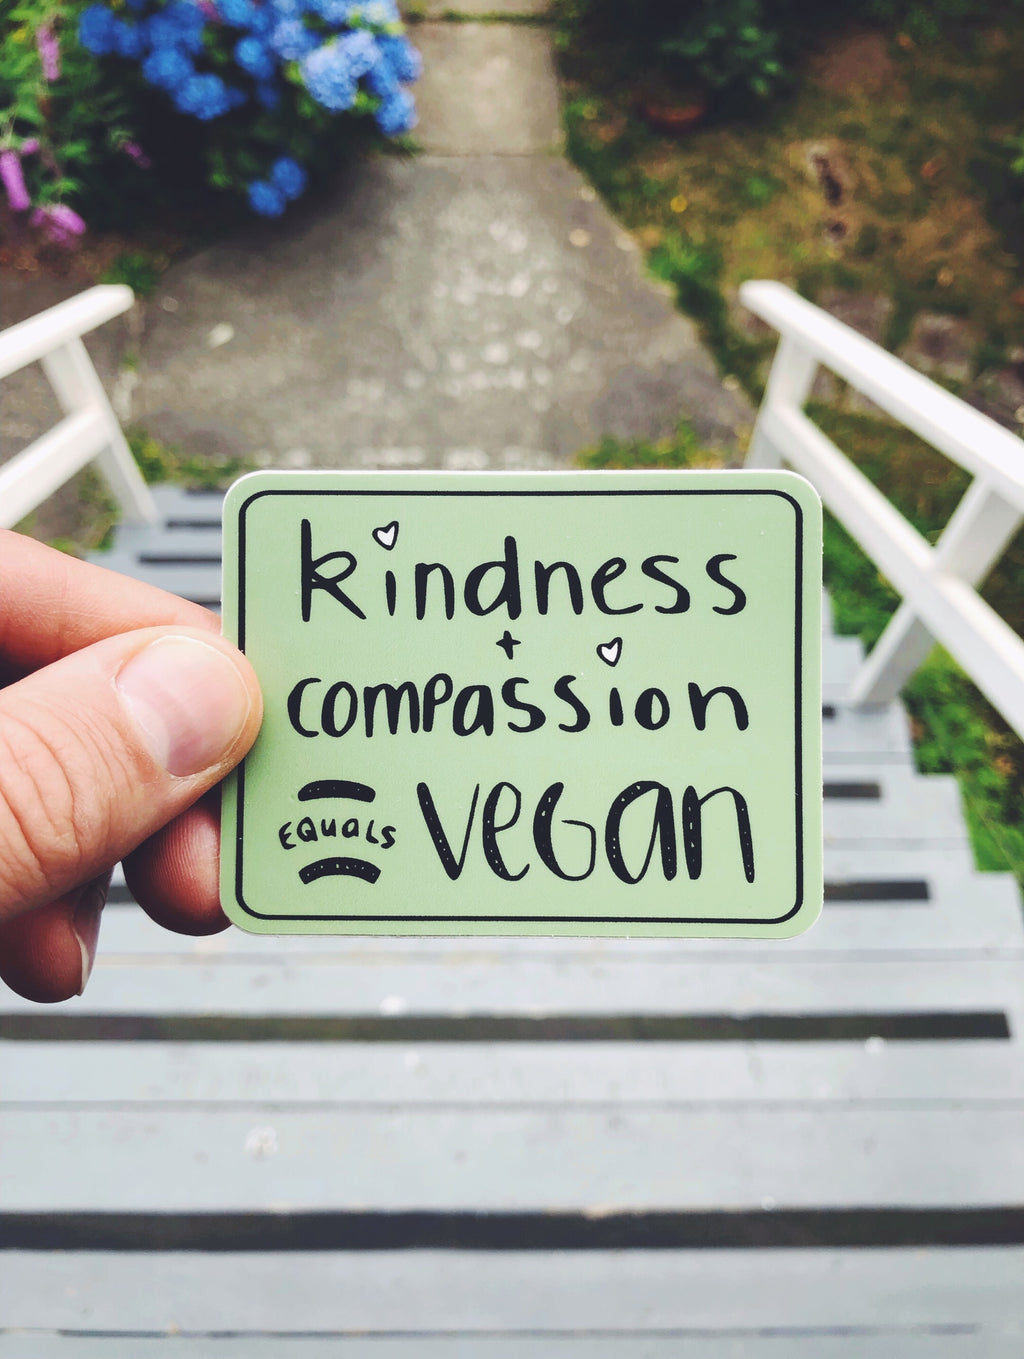 "Kindness + Compassion = Vegan"